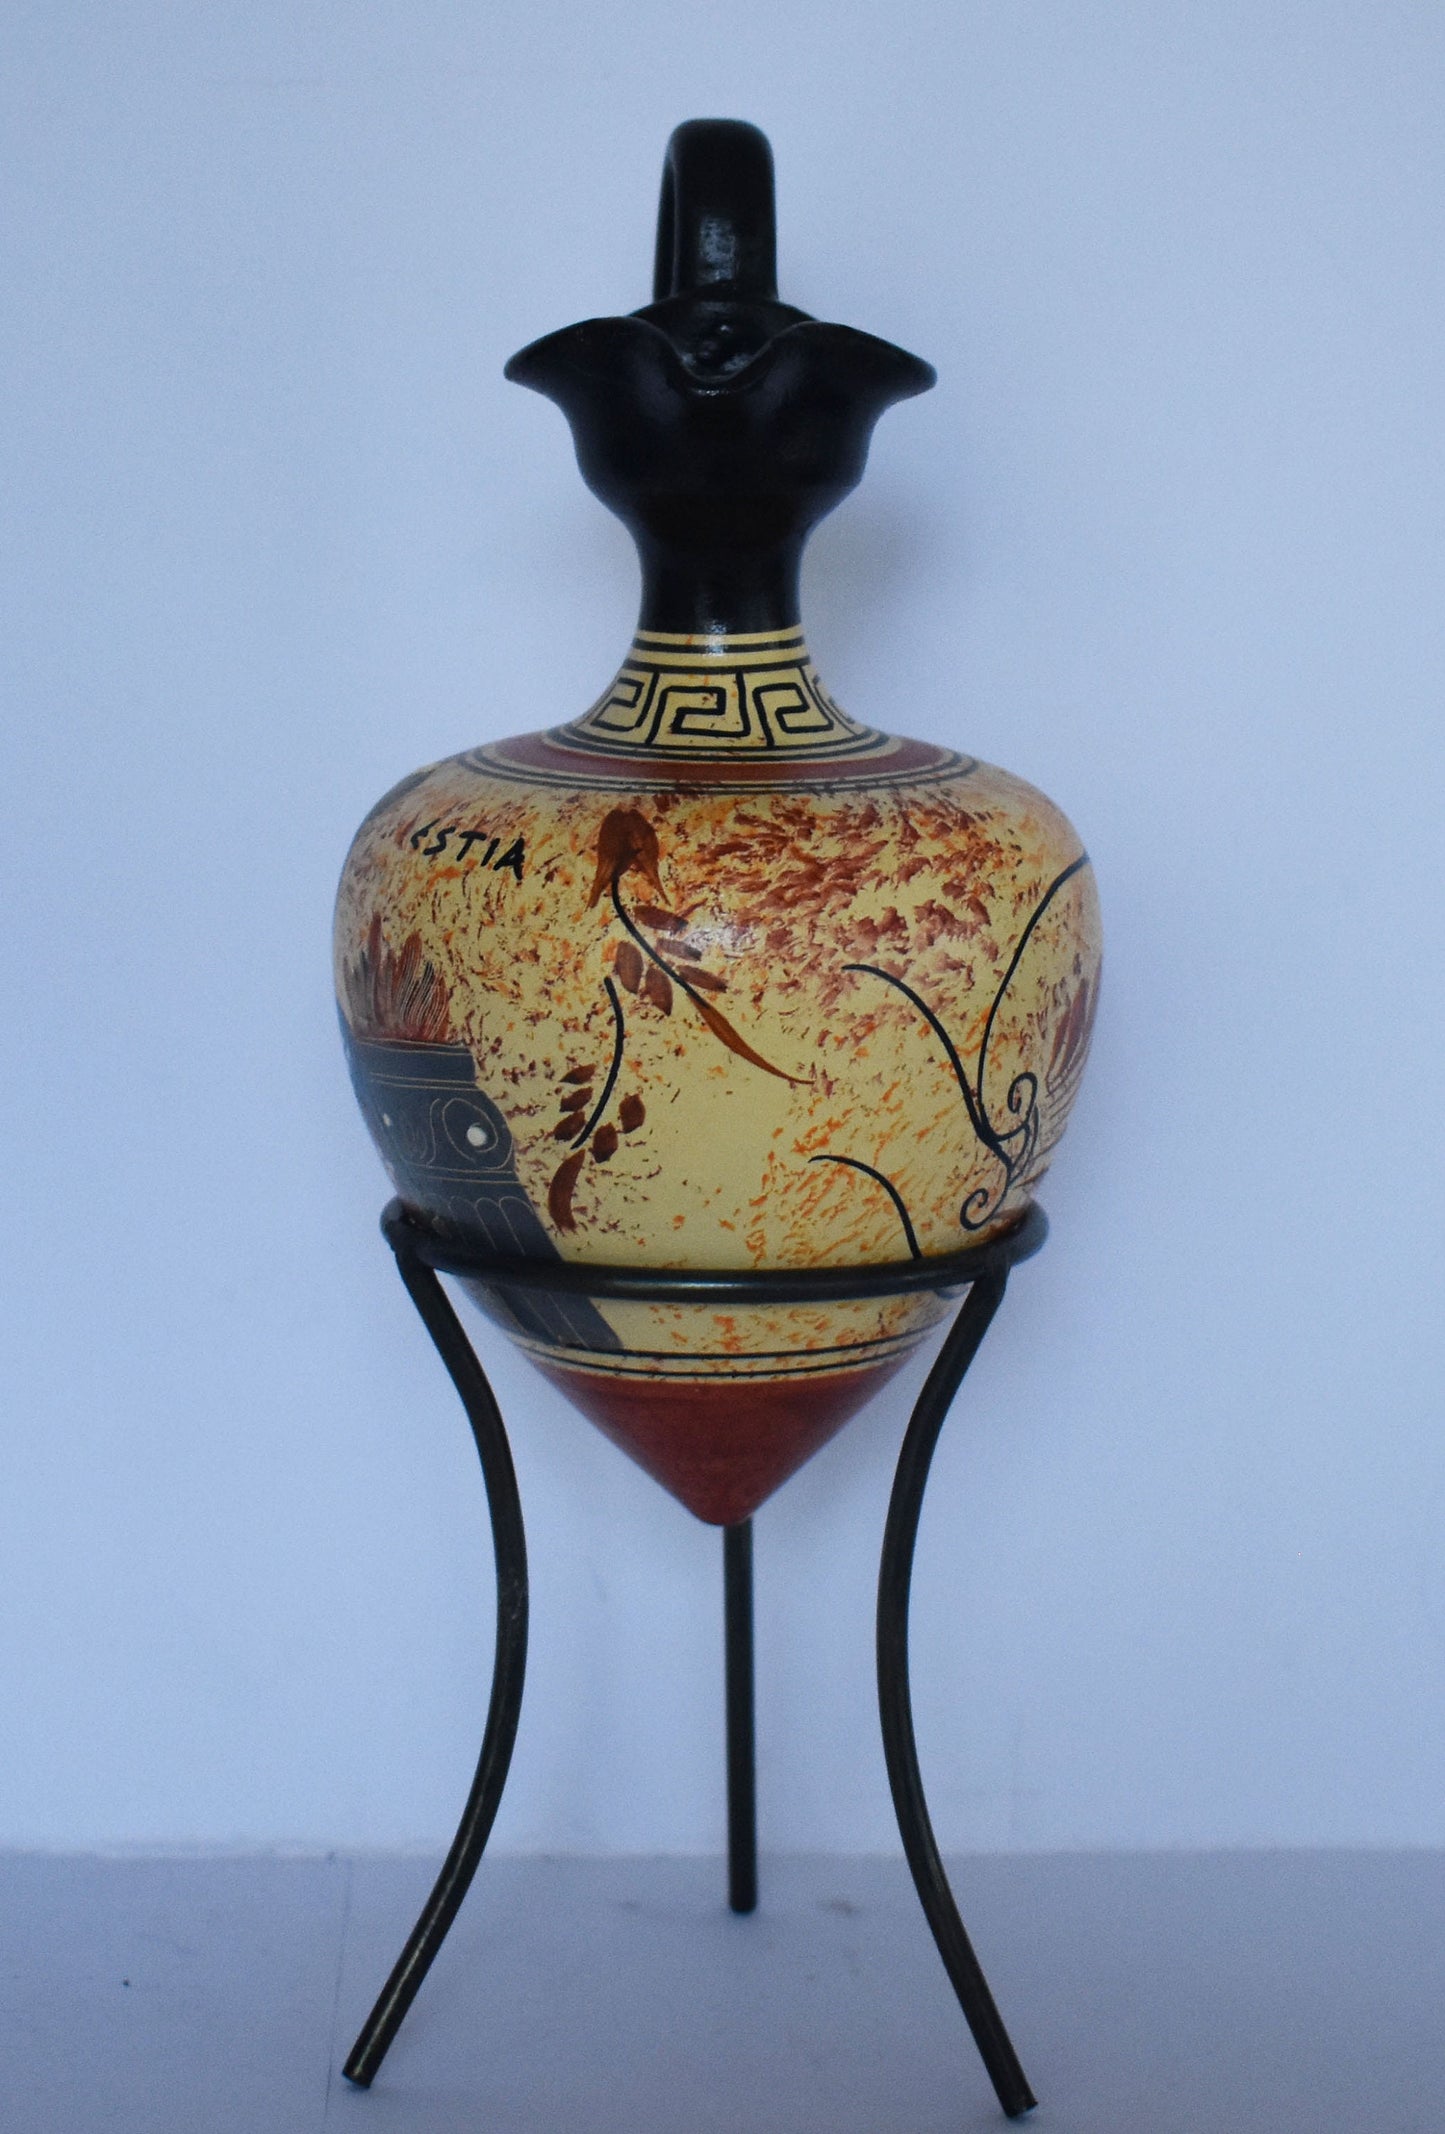 Rhyton - Vessel for Libations or Drinking - Estia - Goddess of Hearth, Family, Home, State - Floral design - Ceramic Vase